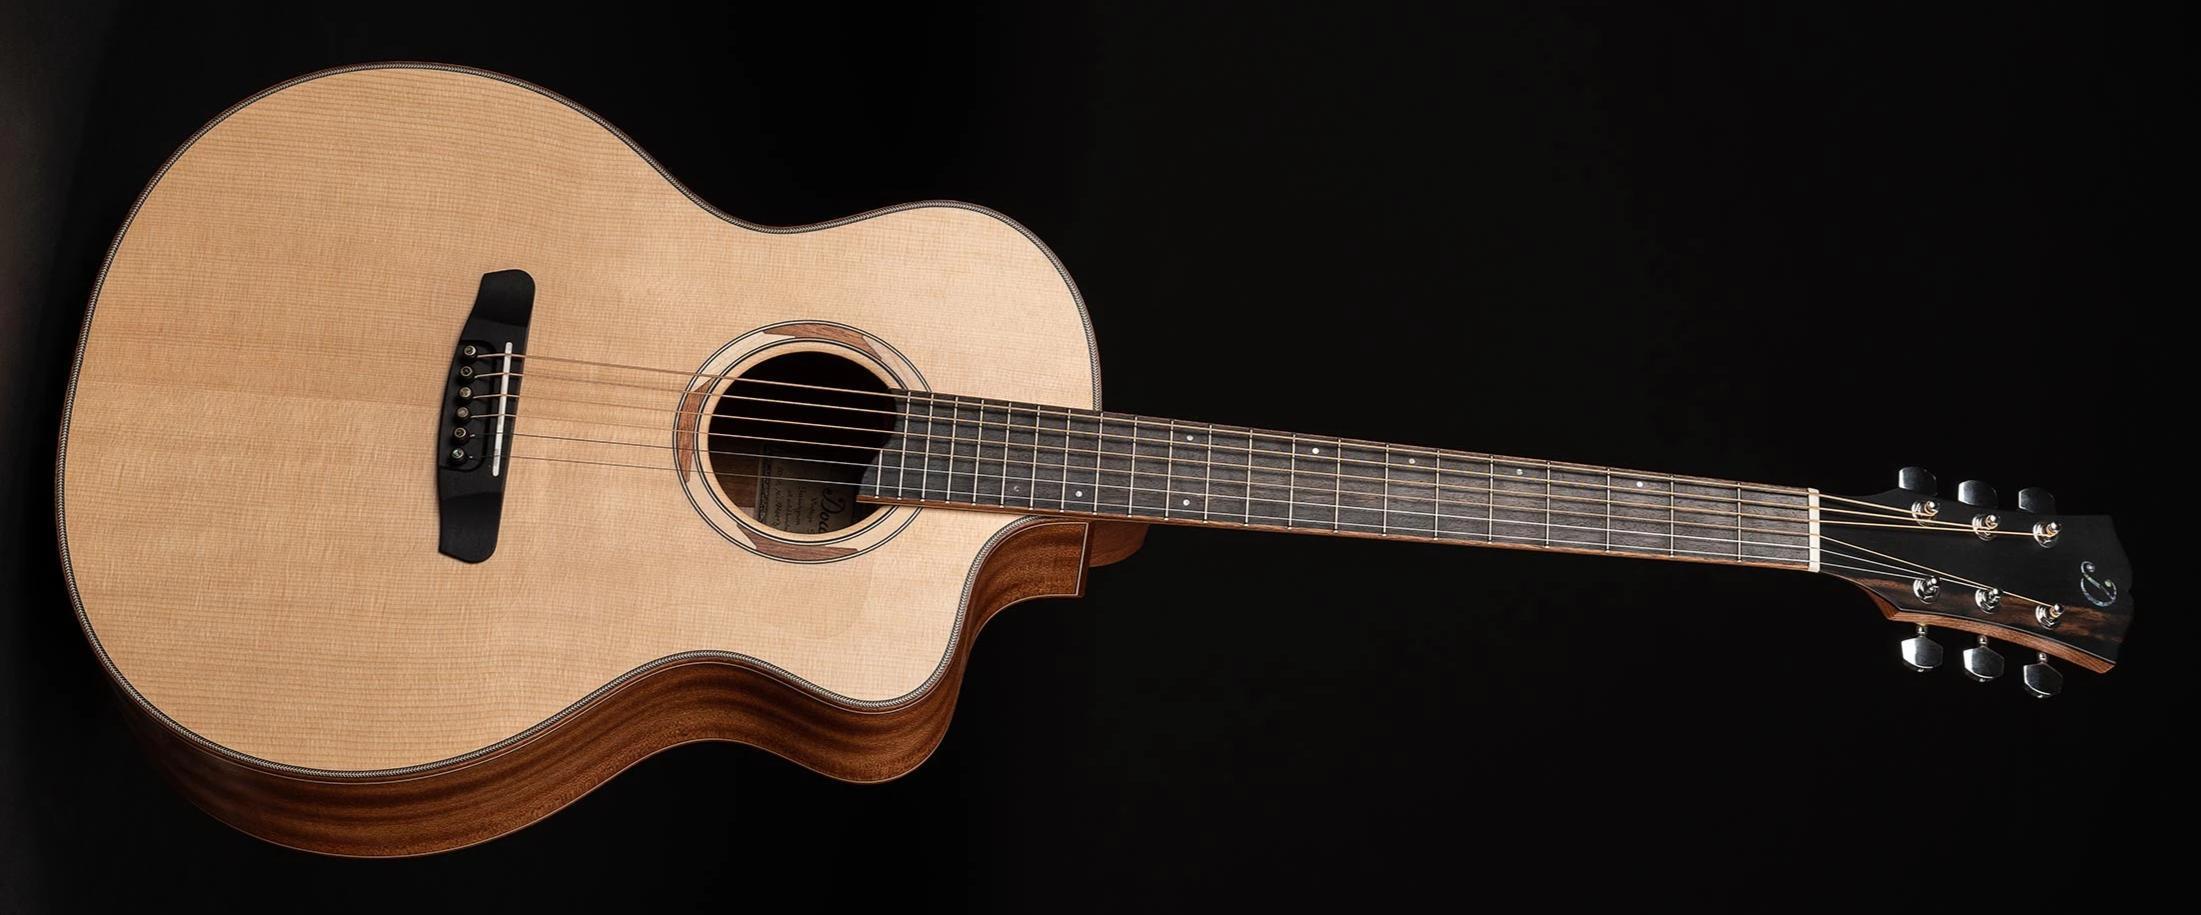 Dowina Mahogany (Pomona) GA, Acoustic Guitar for sale at Richards Guitars.